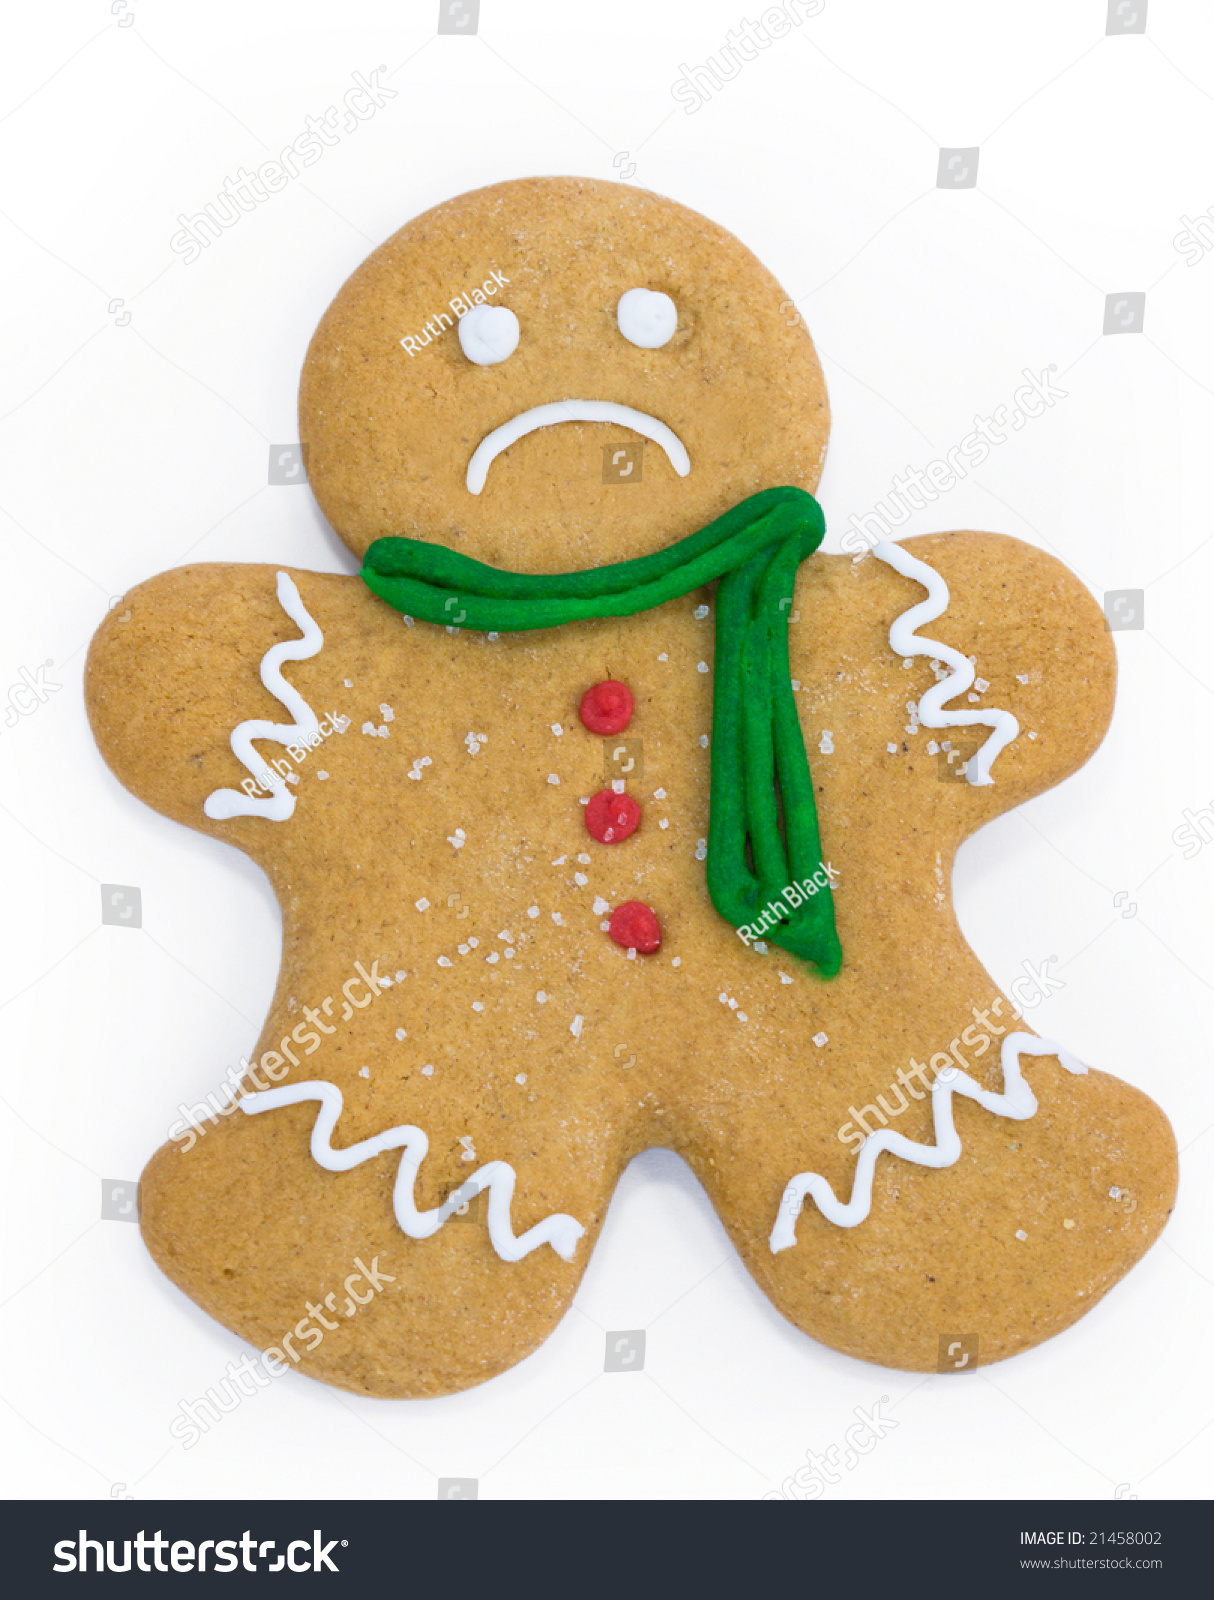 stock-photo-sad-gingerbread-man-21458002